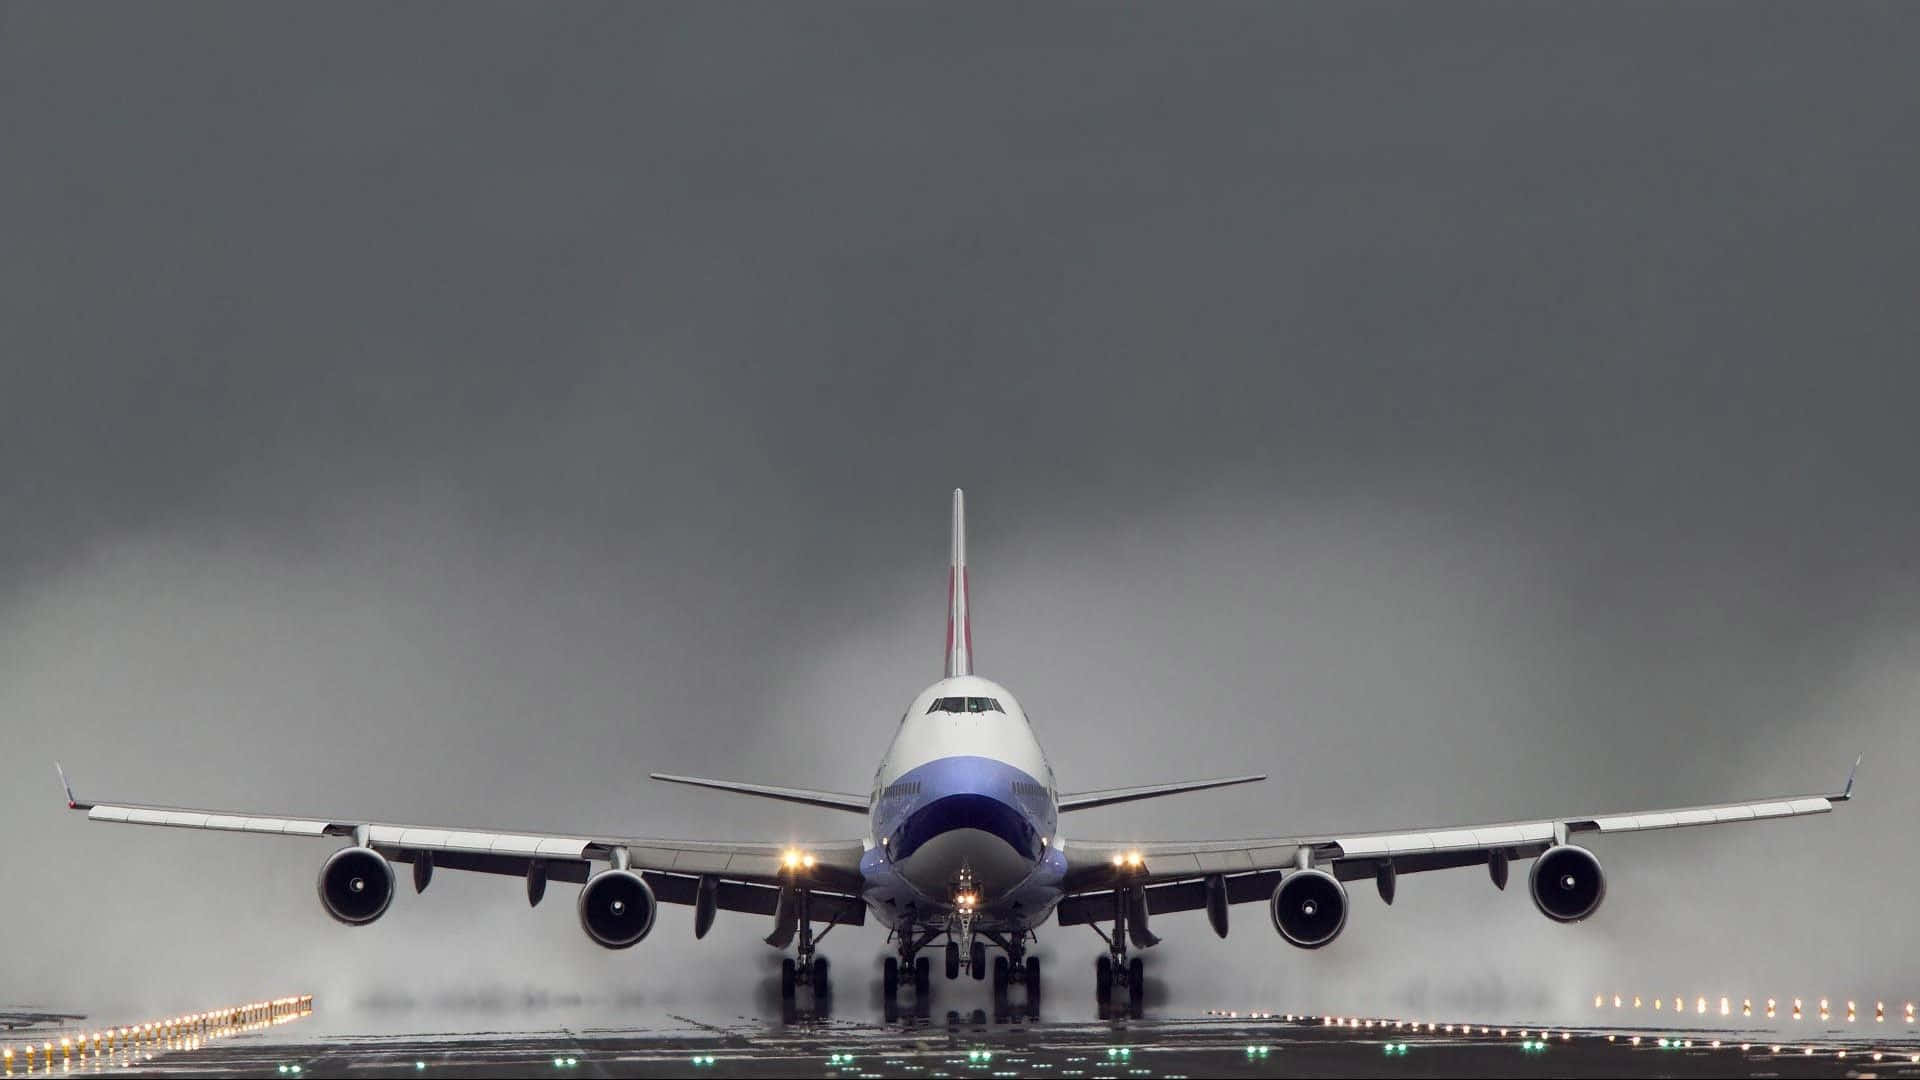 Boeing Hd Jumbo Jets Background